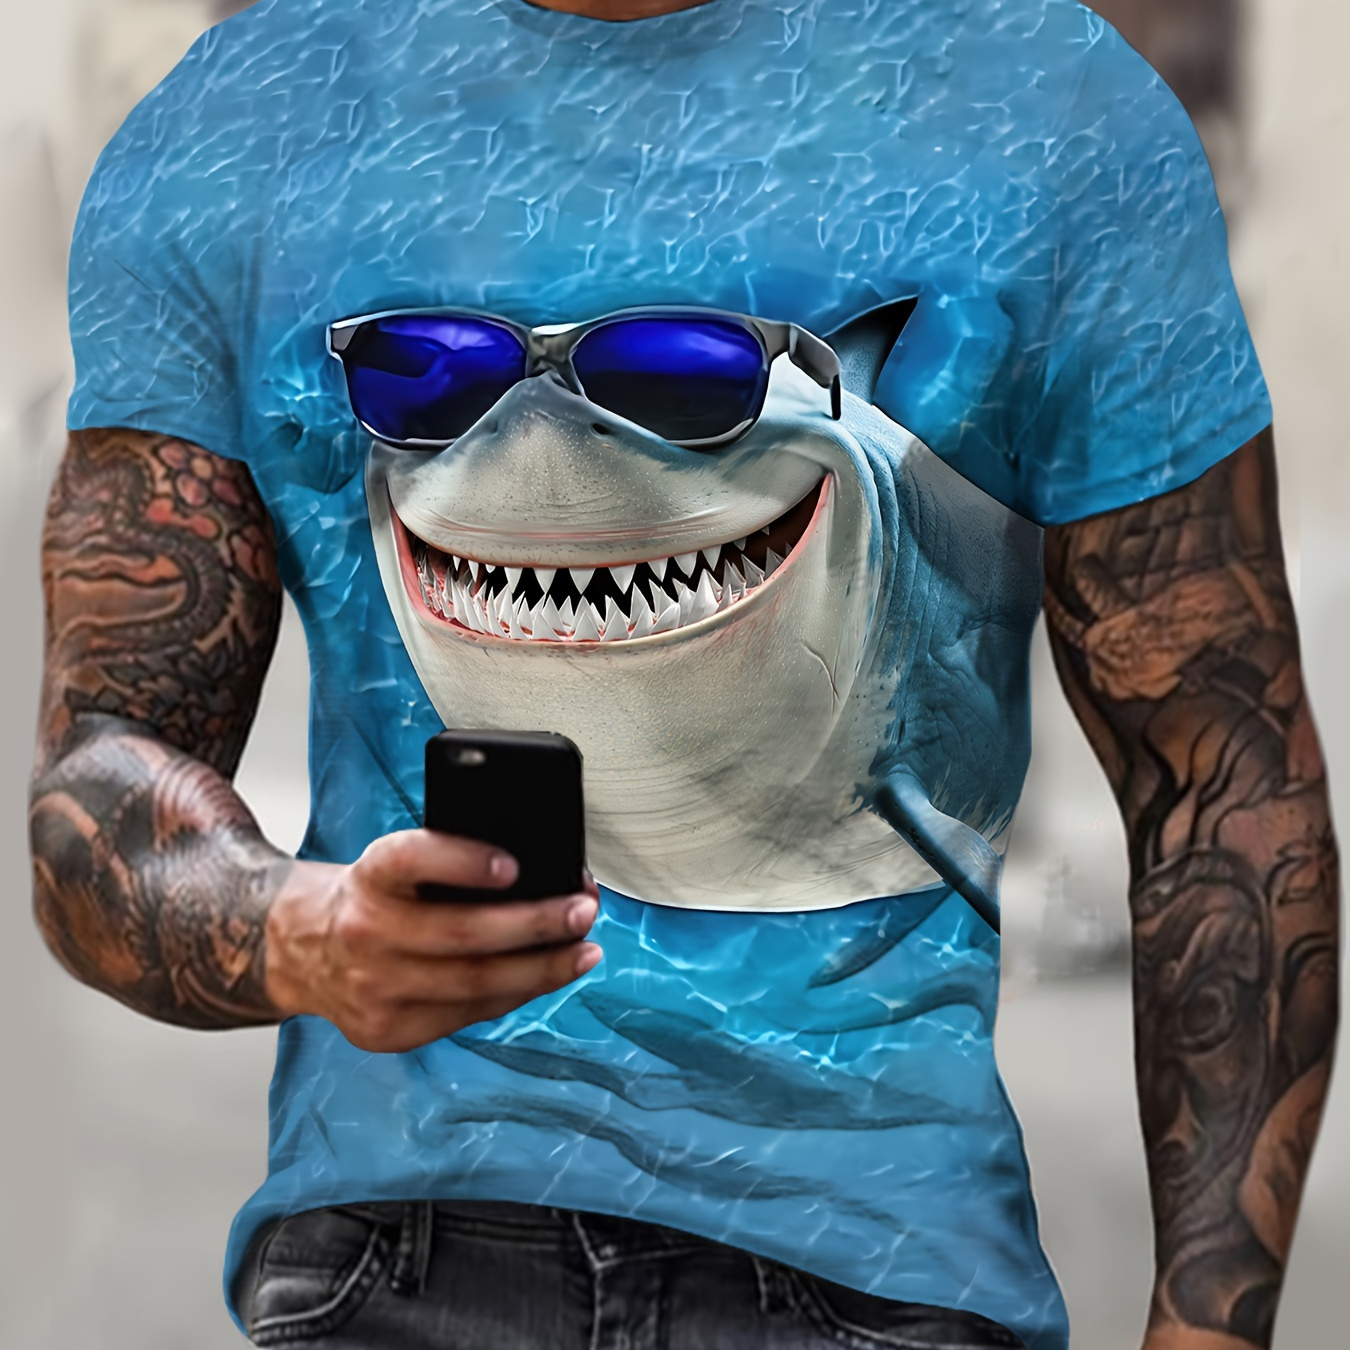 

Funny Shark 3d Graphic Print Men's Novelty Short Sleeve Crew Neck T-shirt, Summer Beach Party